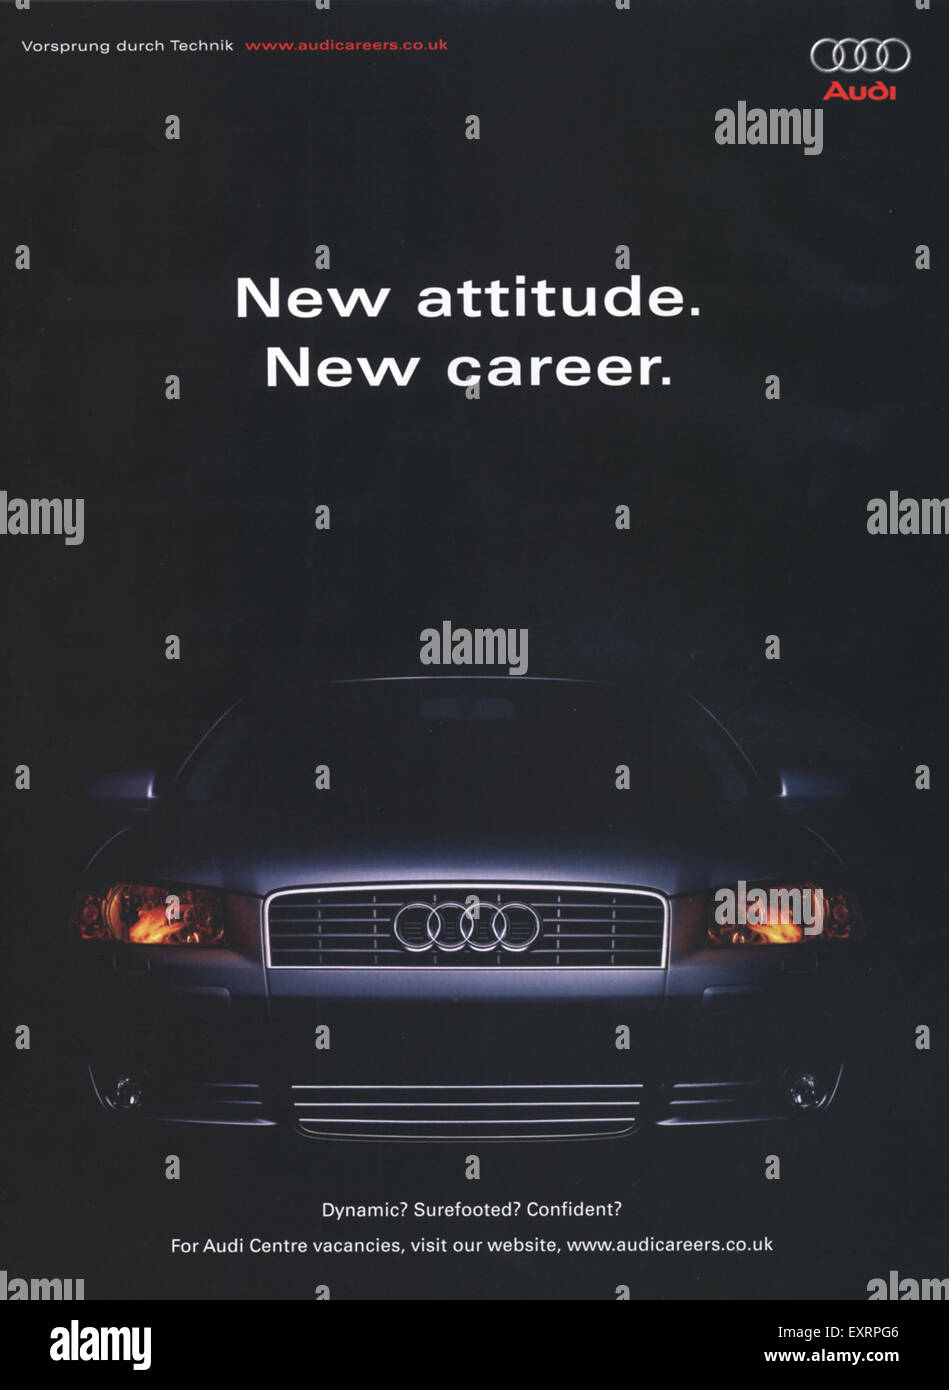 2000s UK Audi Magazine Advert Stock Photo